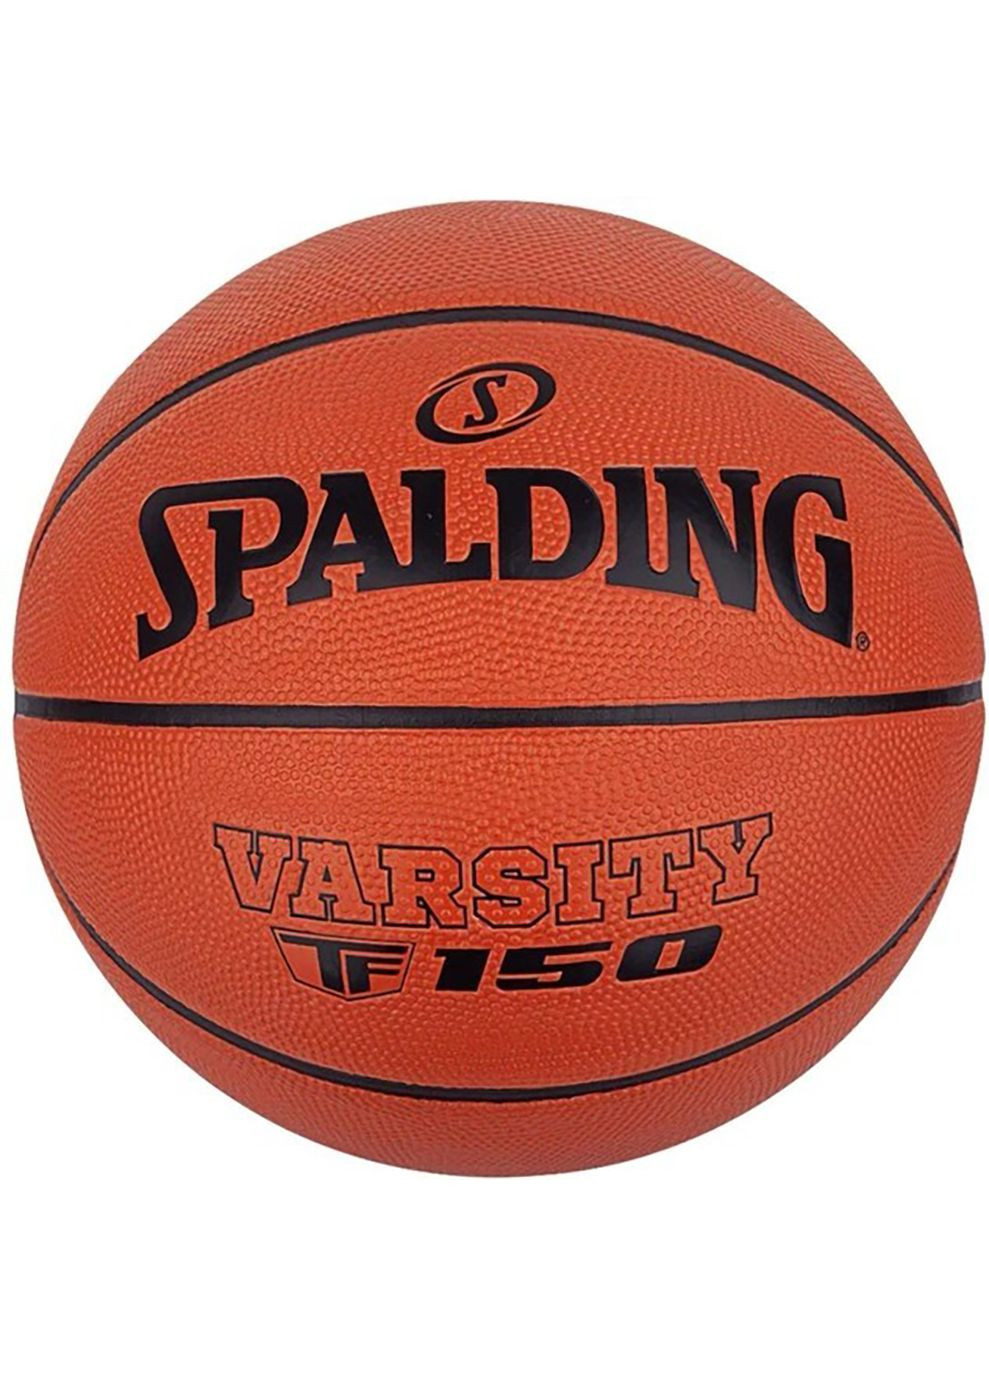 Баскетбольный Мяч Varsity TF-150 FIBA оранжевый Уни 6 Spalding (268833524)